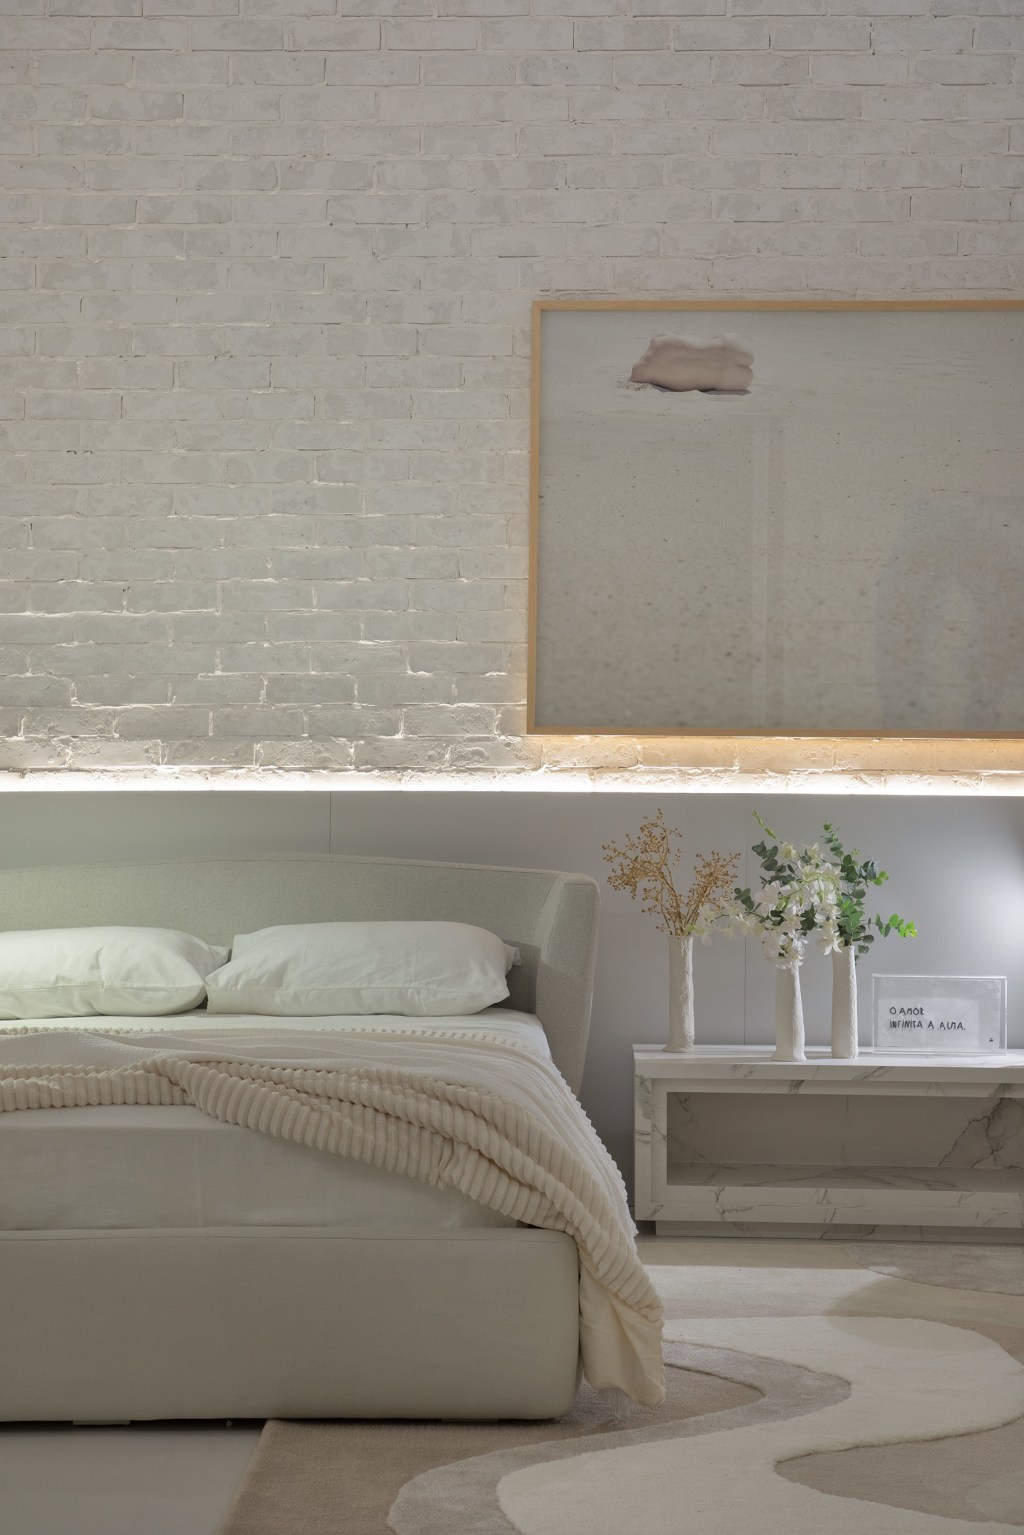 gregory copello estudio ostuni casacor sao paulo 2022 decoracao design mostras quarto cama vaso